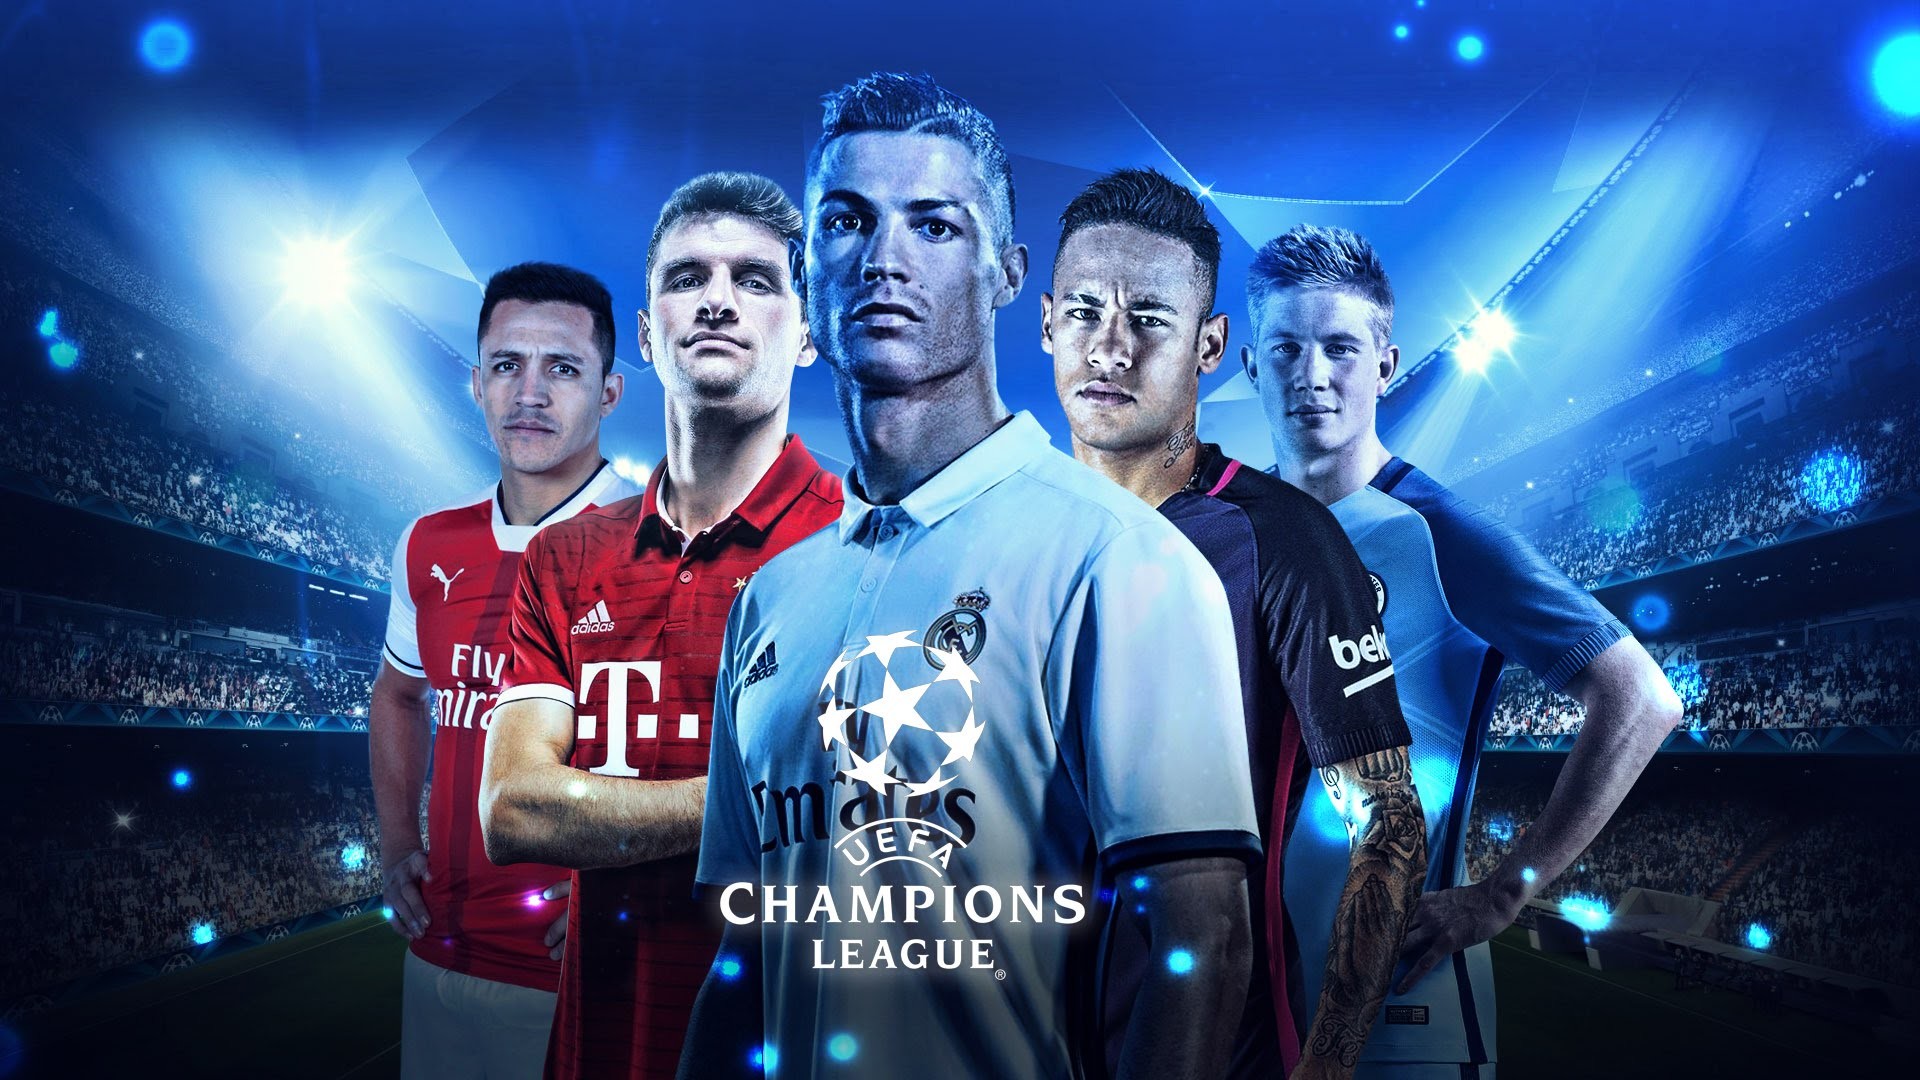 champions league hintergrundbilder,produkt,fußballspieler,mannschaft,ventilator,performance